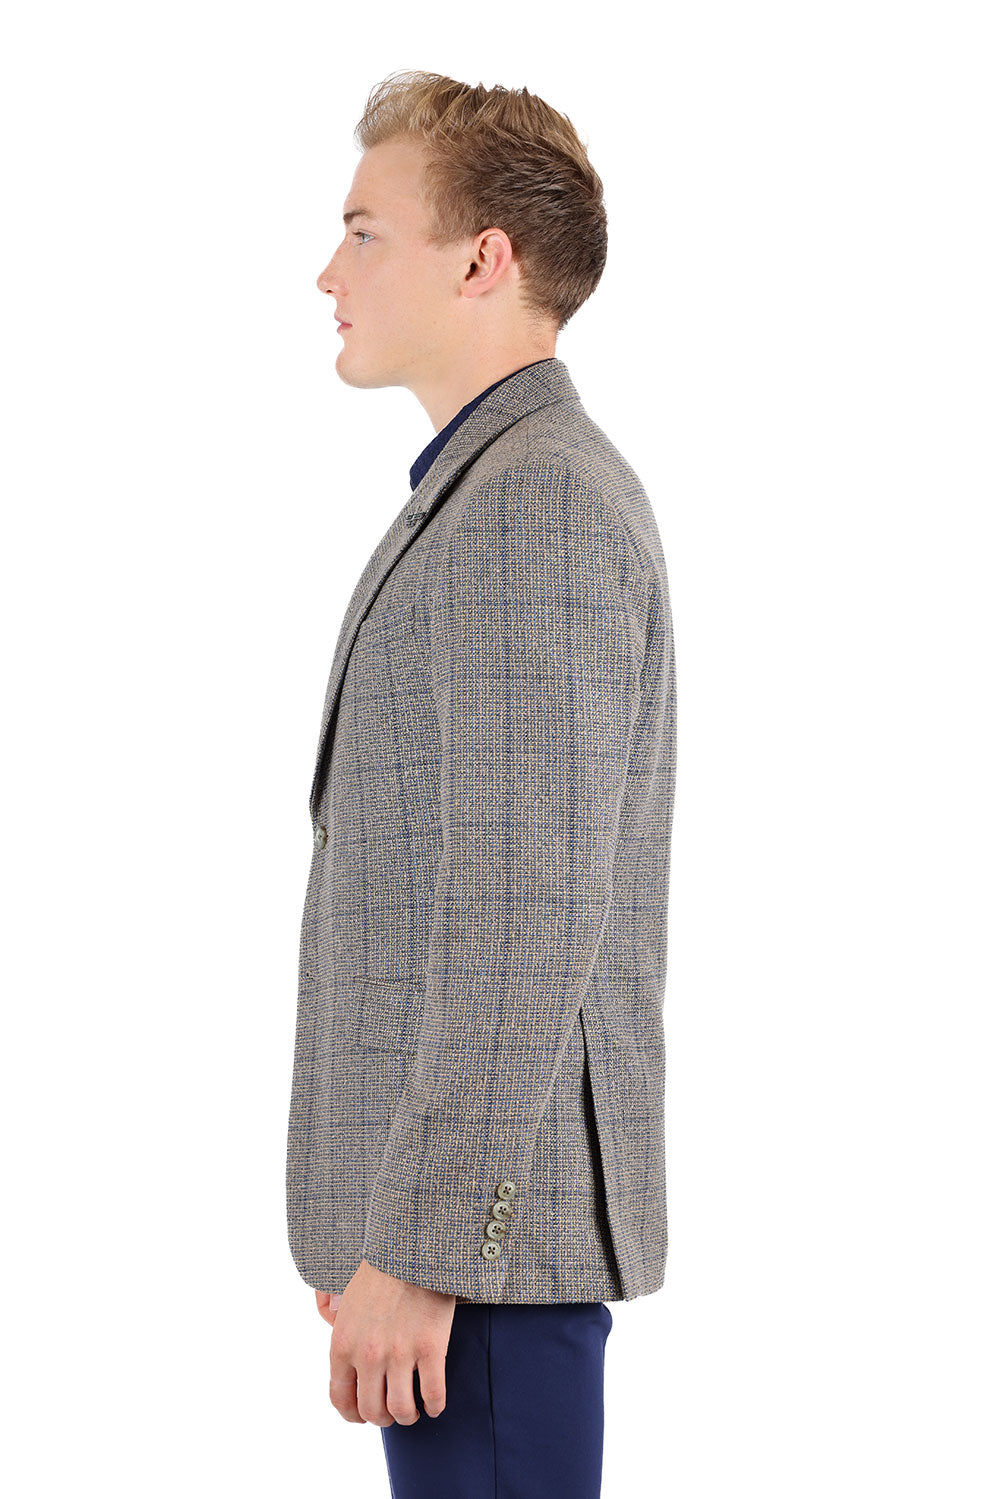 BARABAS Men's Wool Blend Tweed Design Sport Coat Blazer 3BL09 Tan